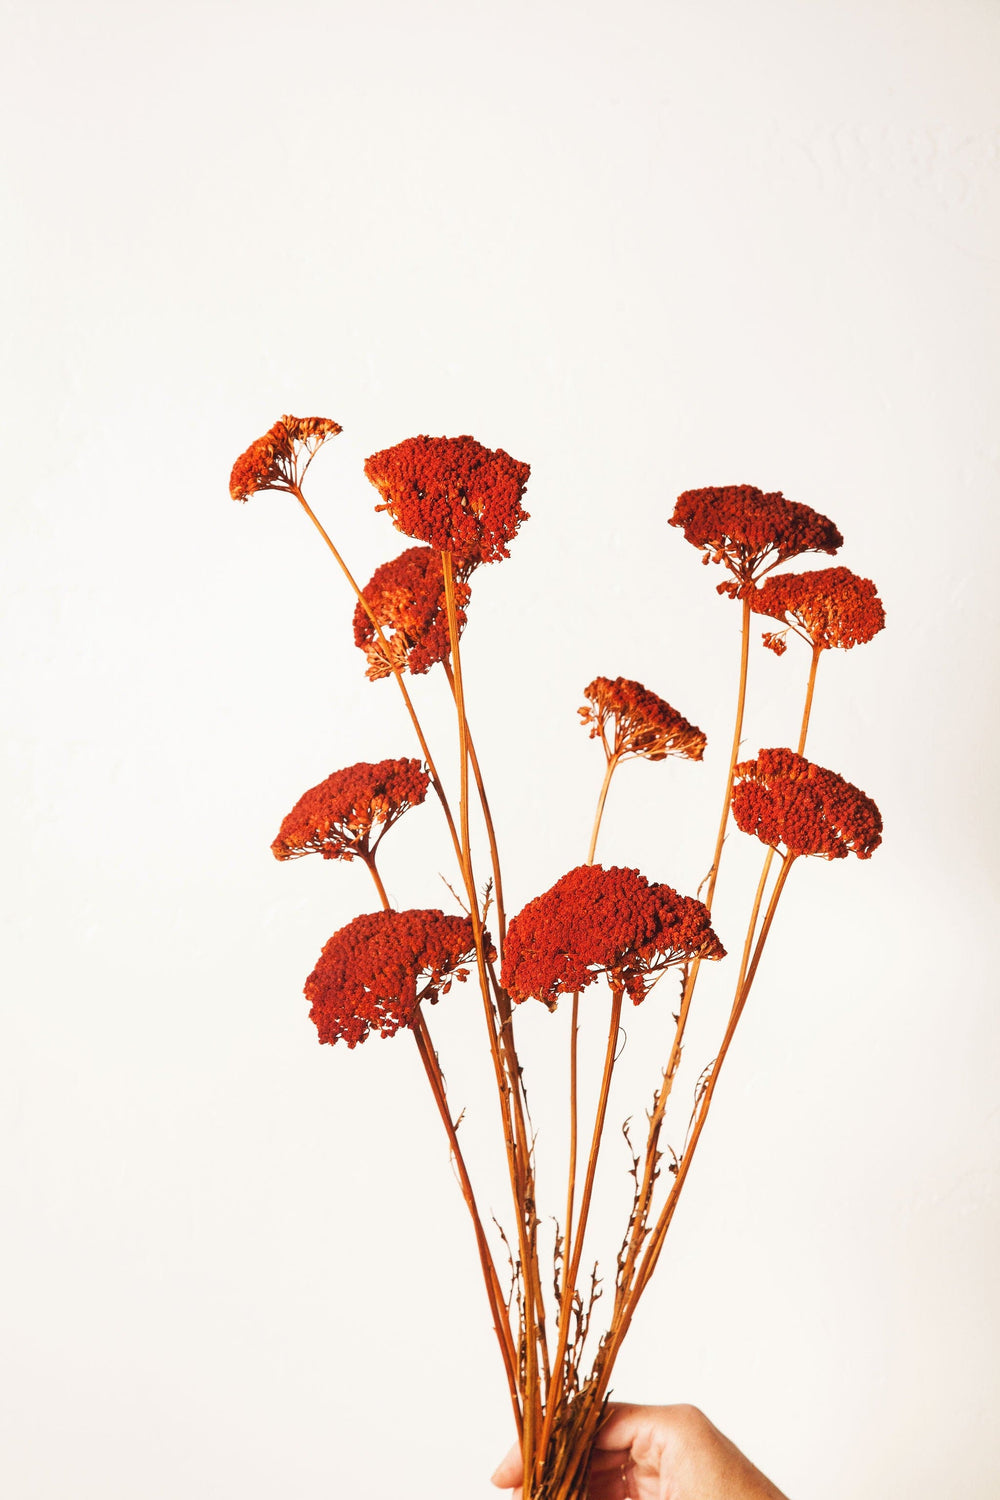 Idlewild Floral Co. Rust Dried Yarrow